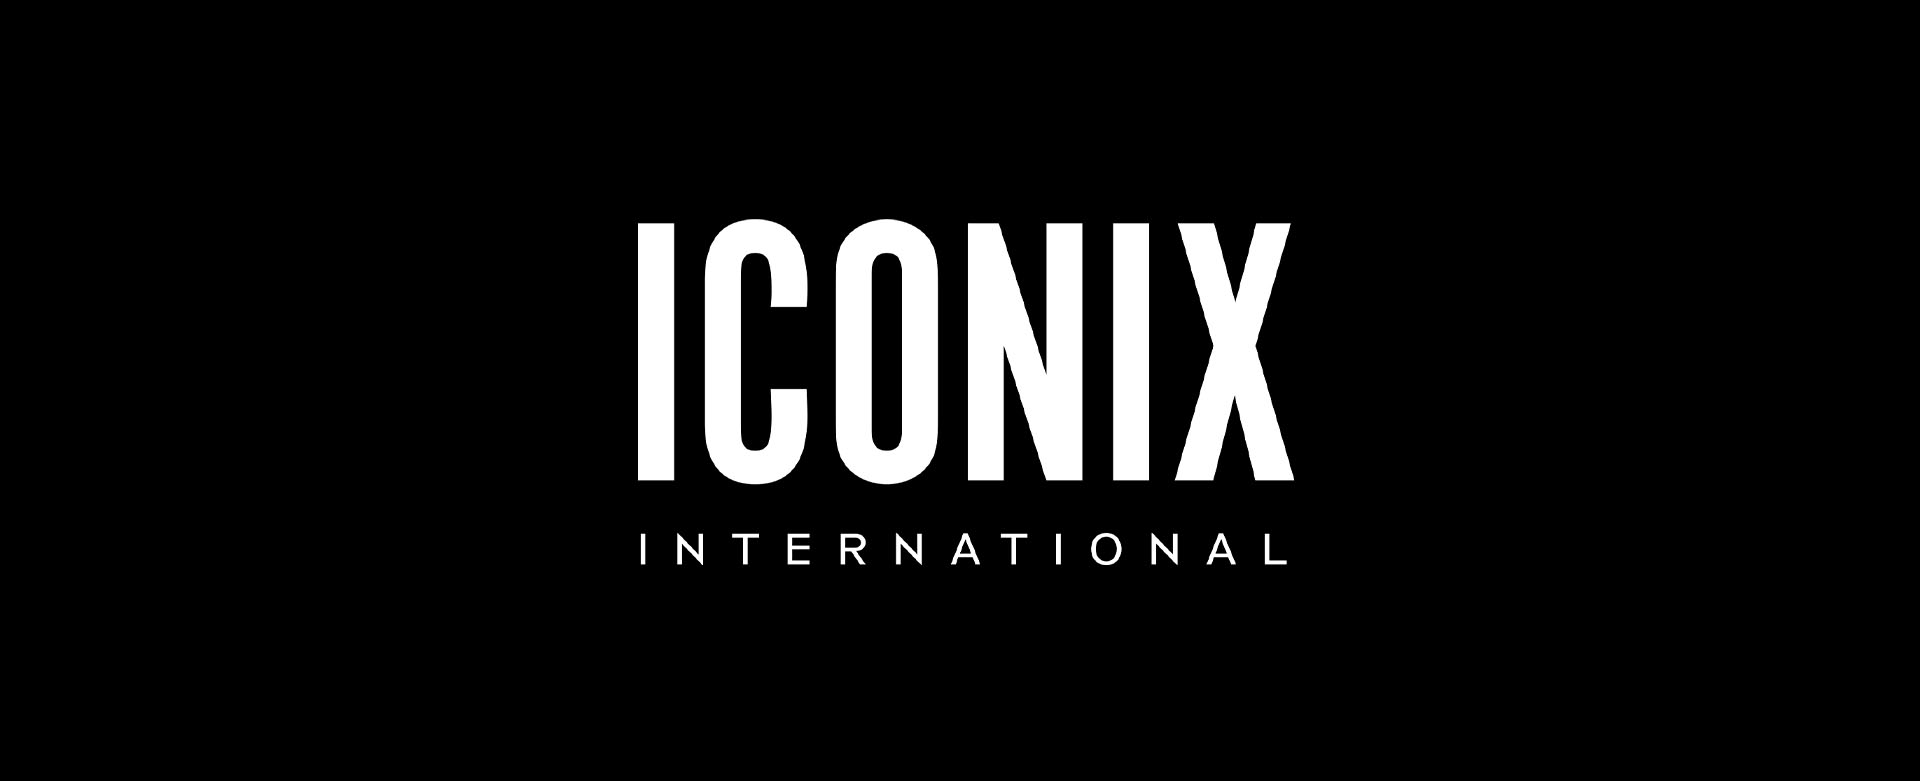 Iconix-International-62cc33e6d33ca